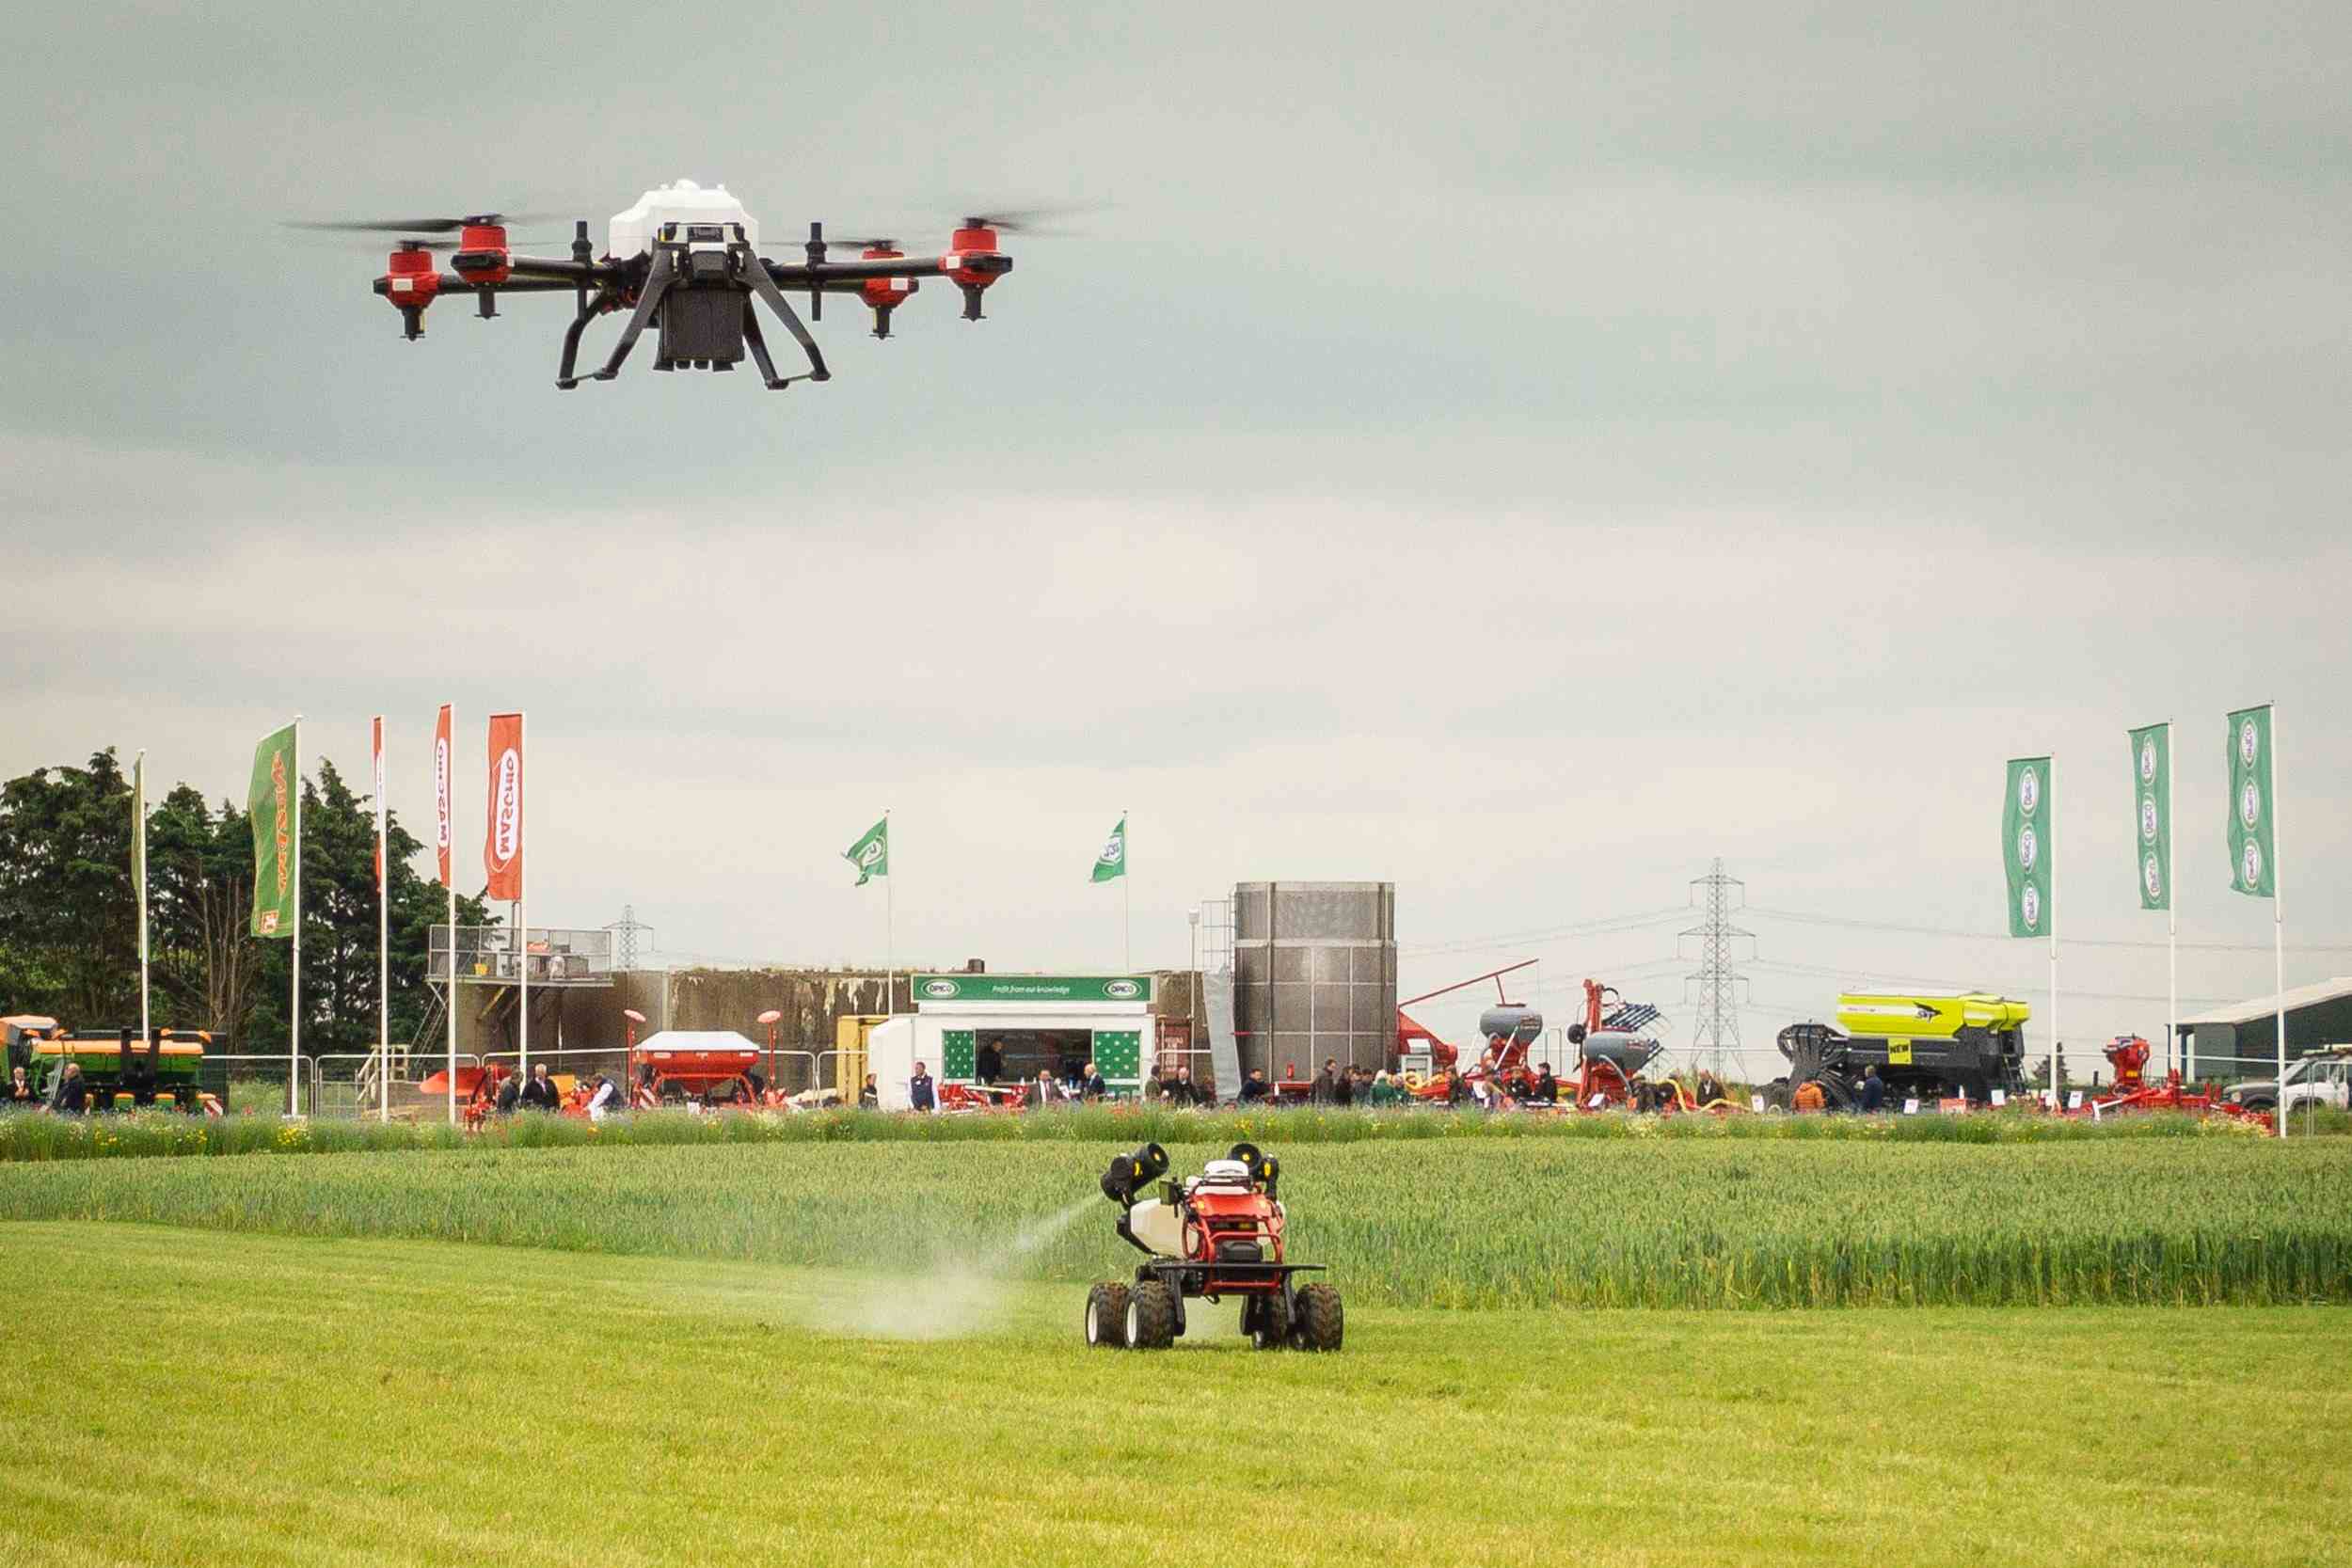 XAG R150 robot & P Series drone showcase their performance to the public